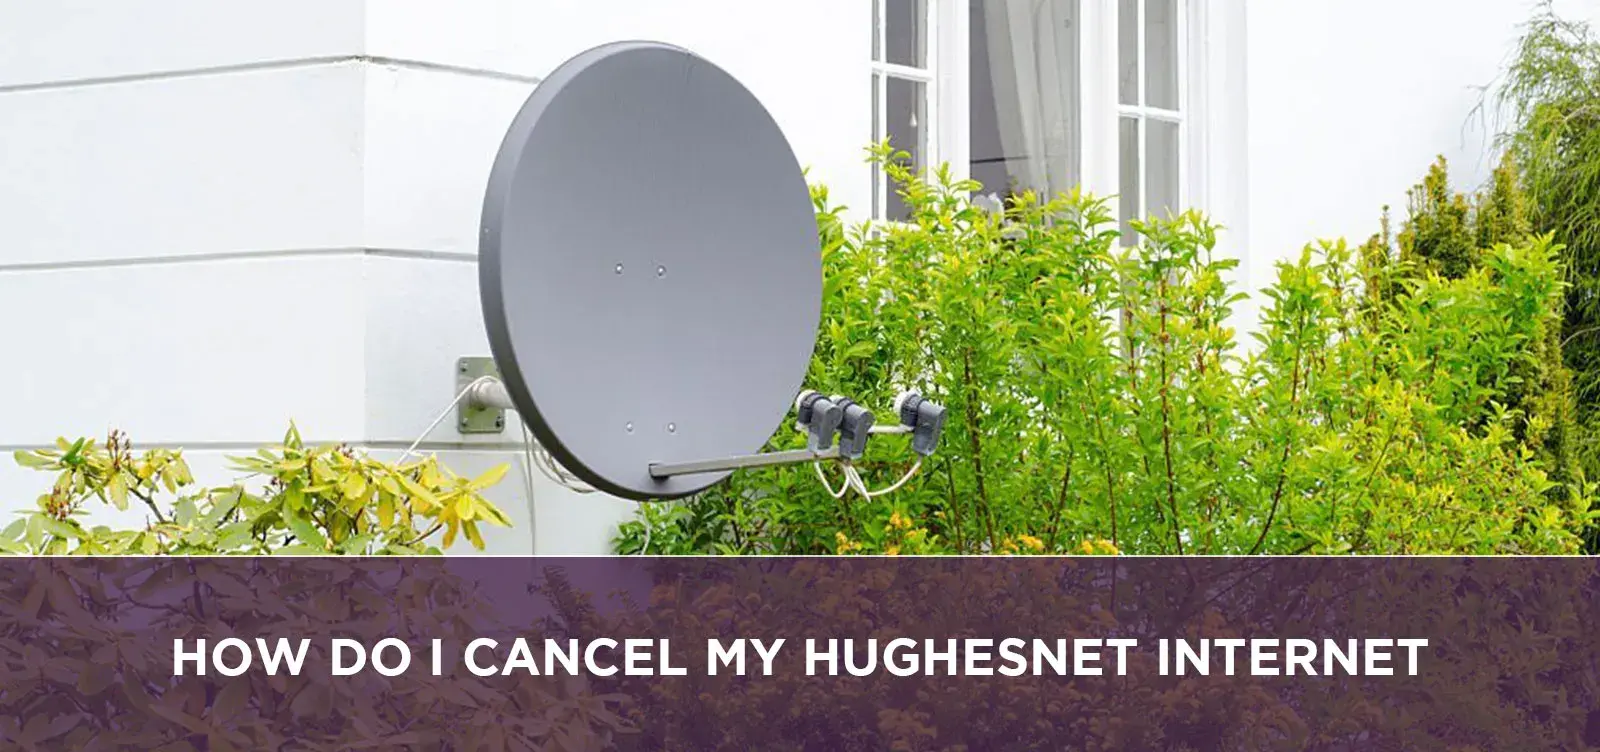 How Do I Cancel My Hughesnet Internet?